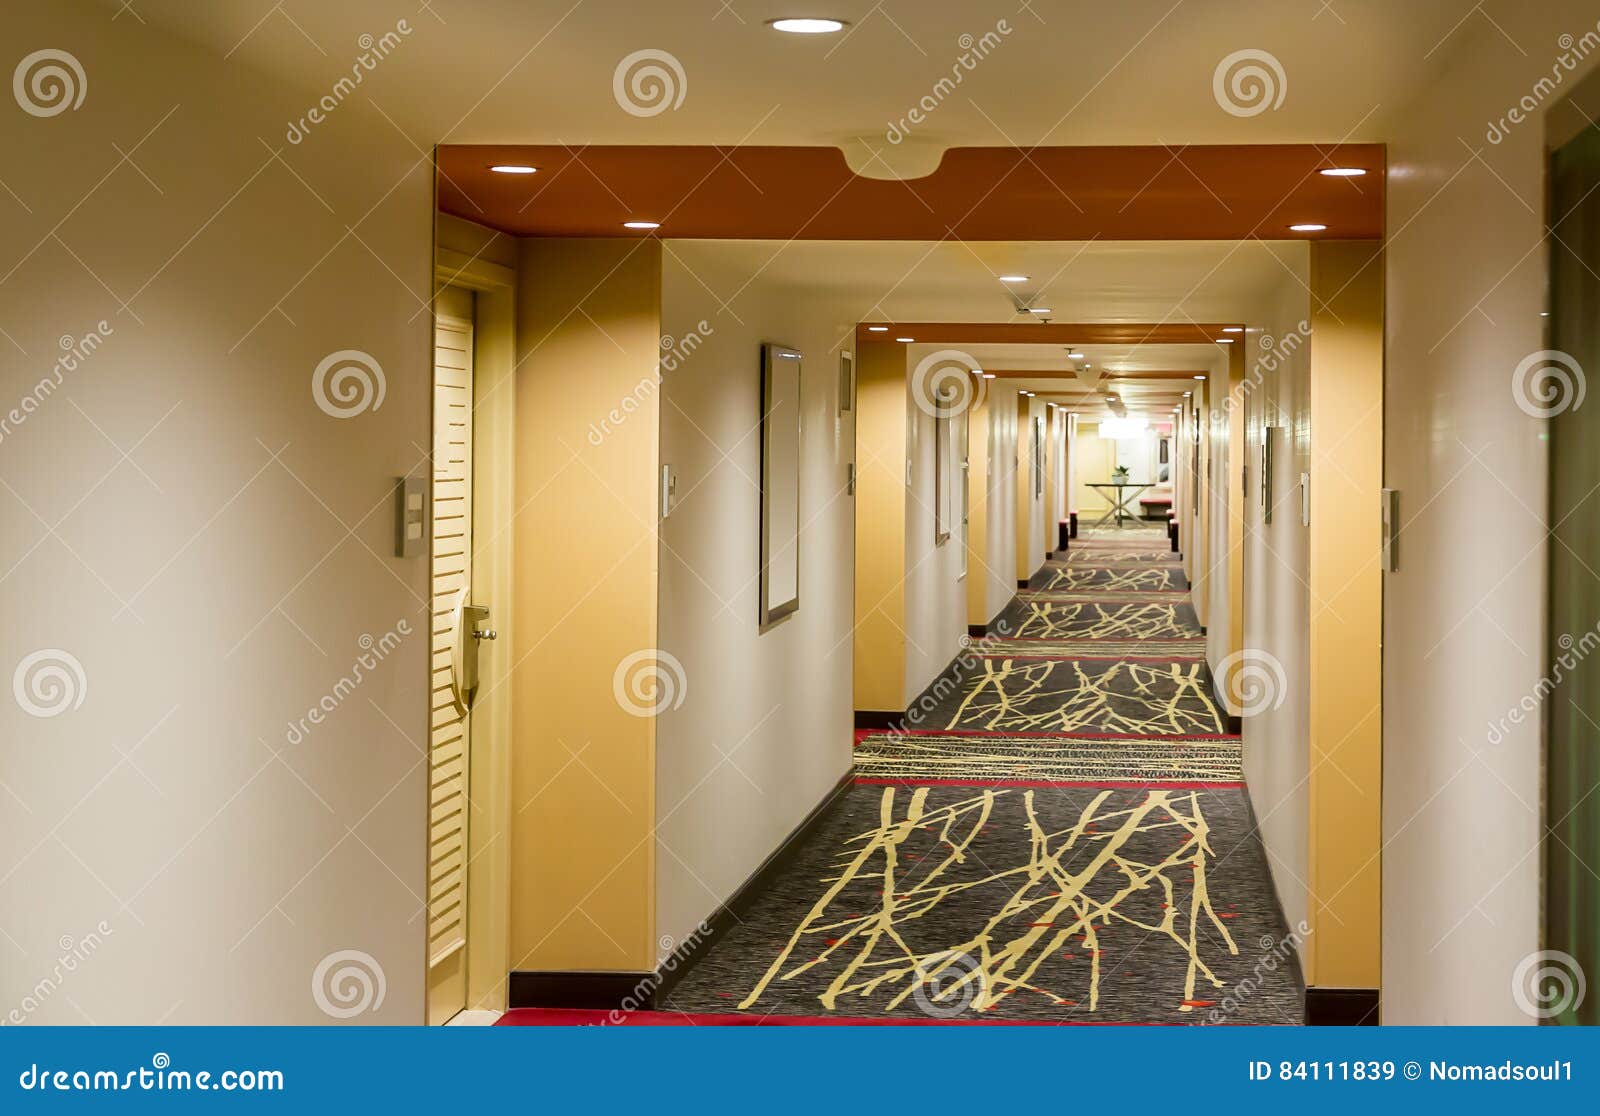 Hotel Corridor Interior Stock Image Image Of Hallway